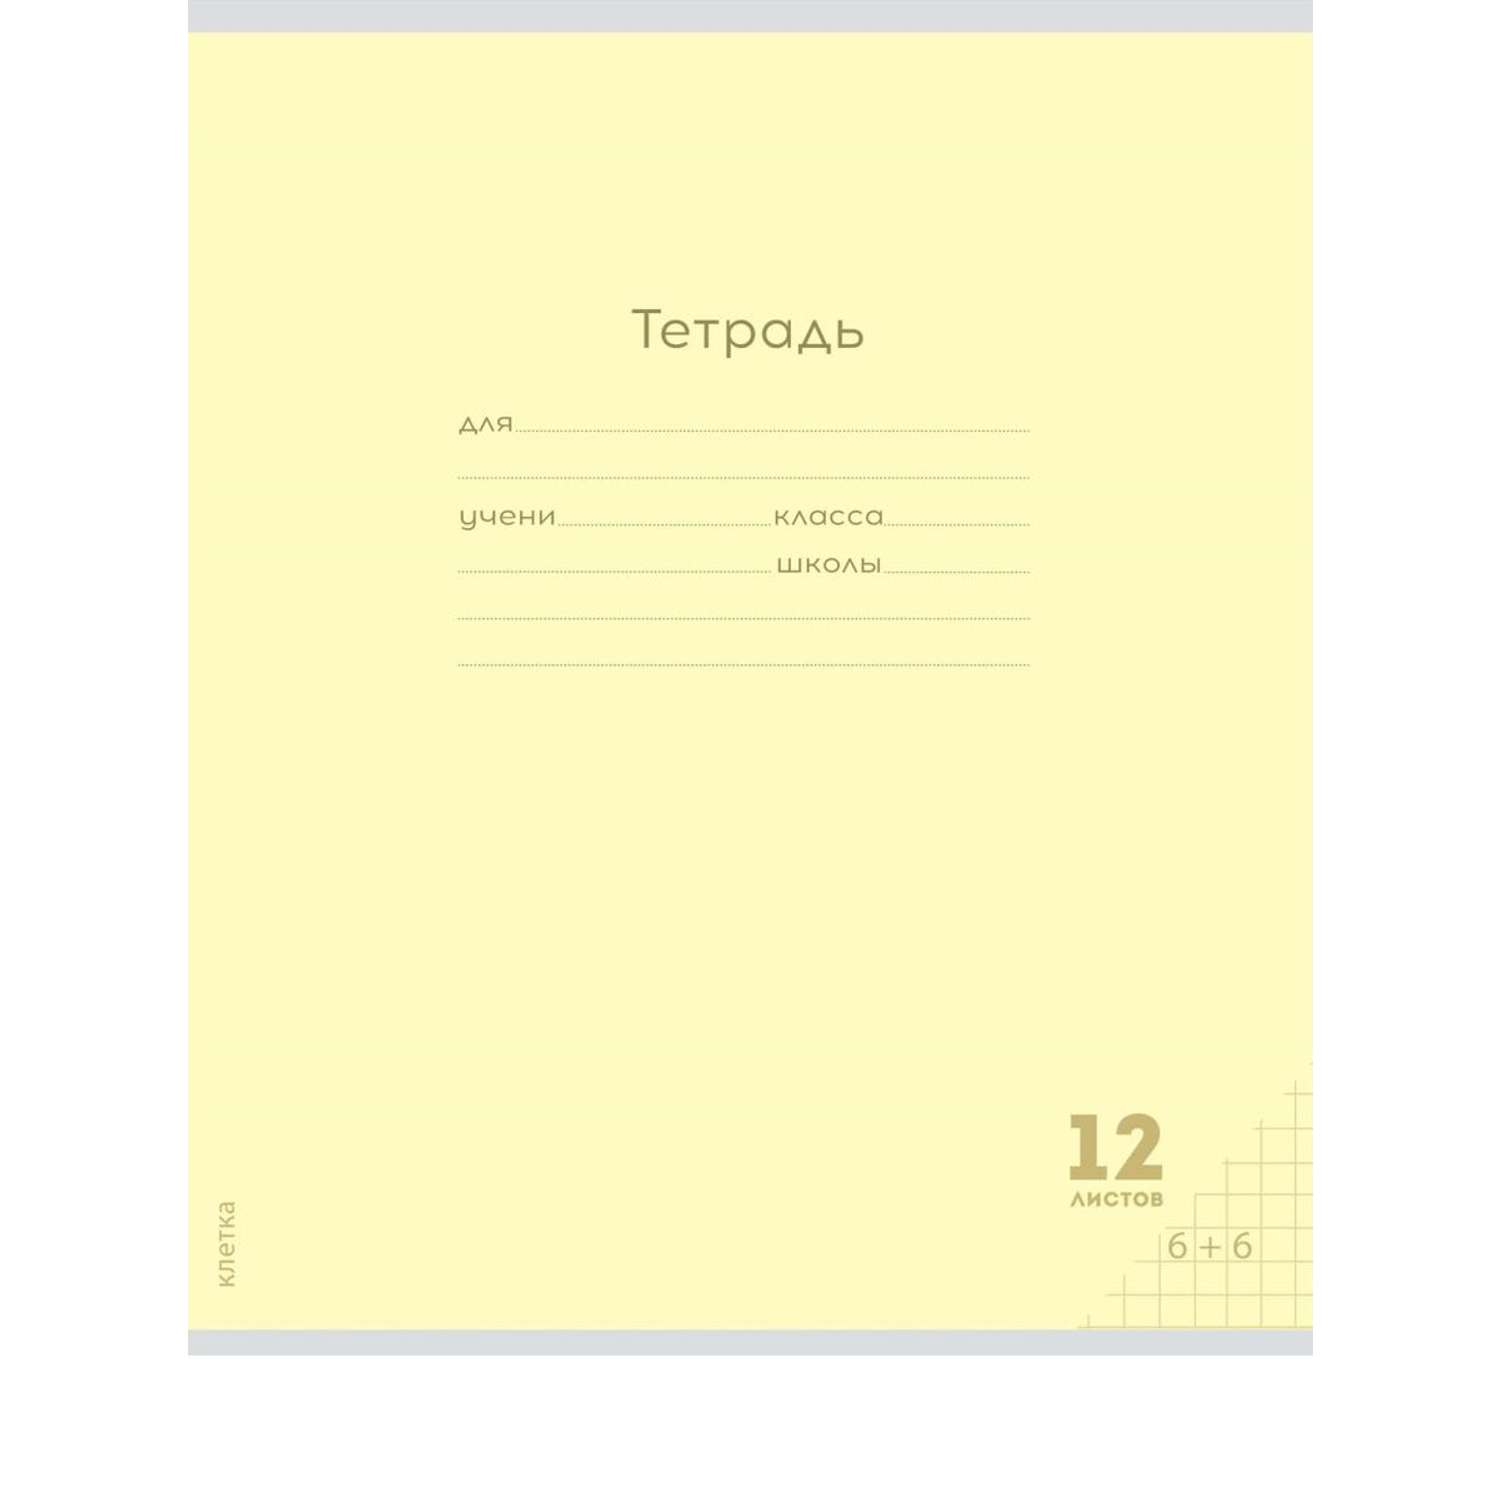 Тетрадь 12л классика Prof Press Классика newклетка желтая комплект 10 штук - фото 2